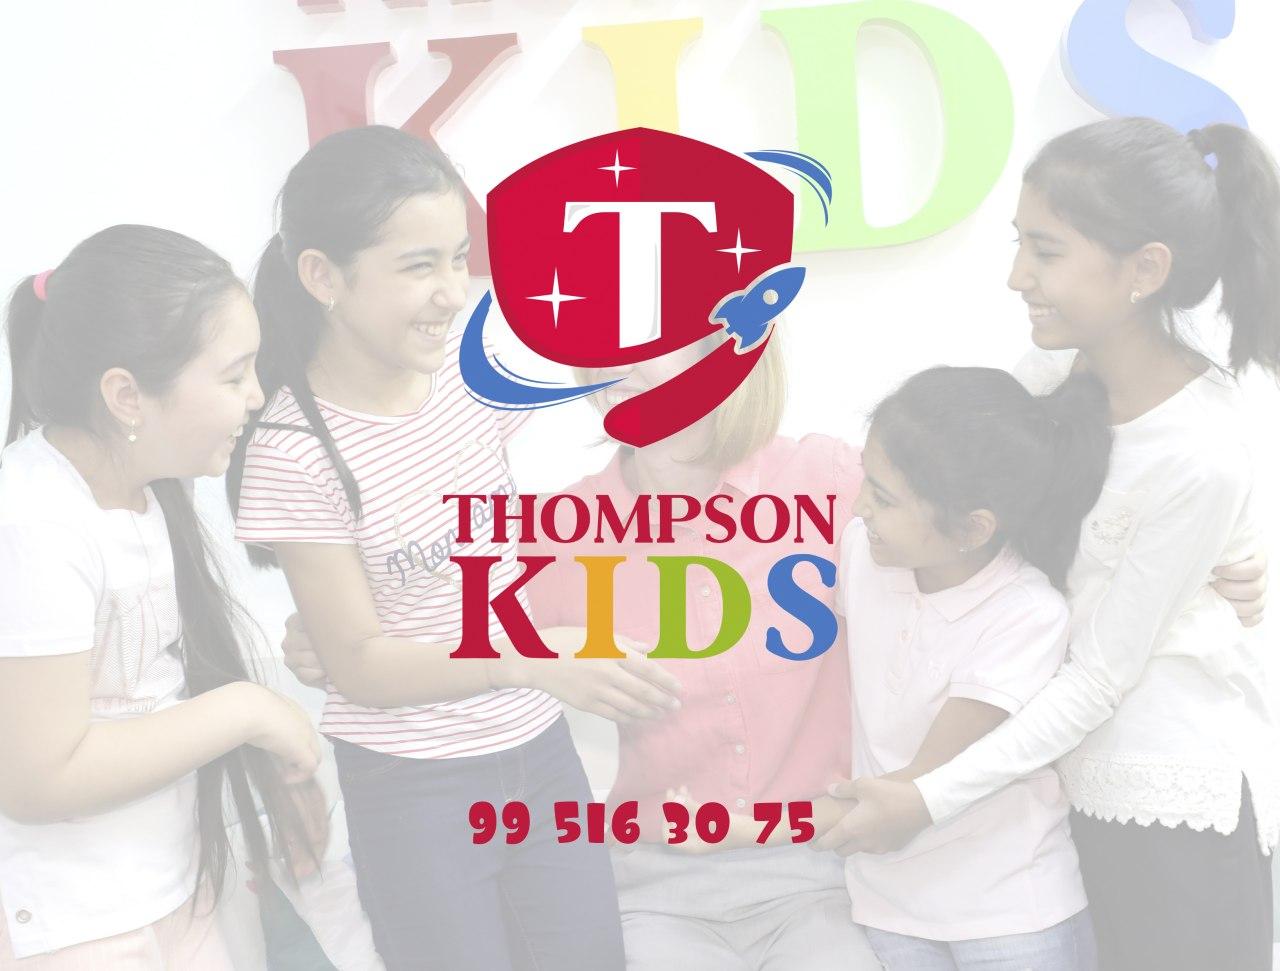 В Thompson Kids пройдёт семинар по подготовке детей в президентскую школу